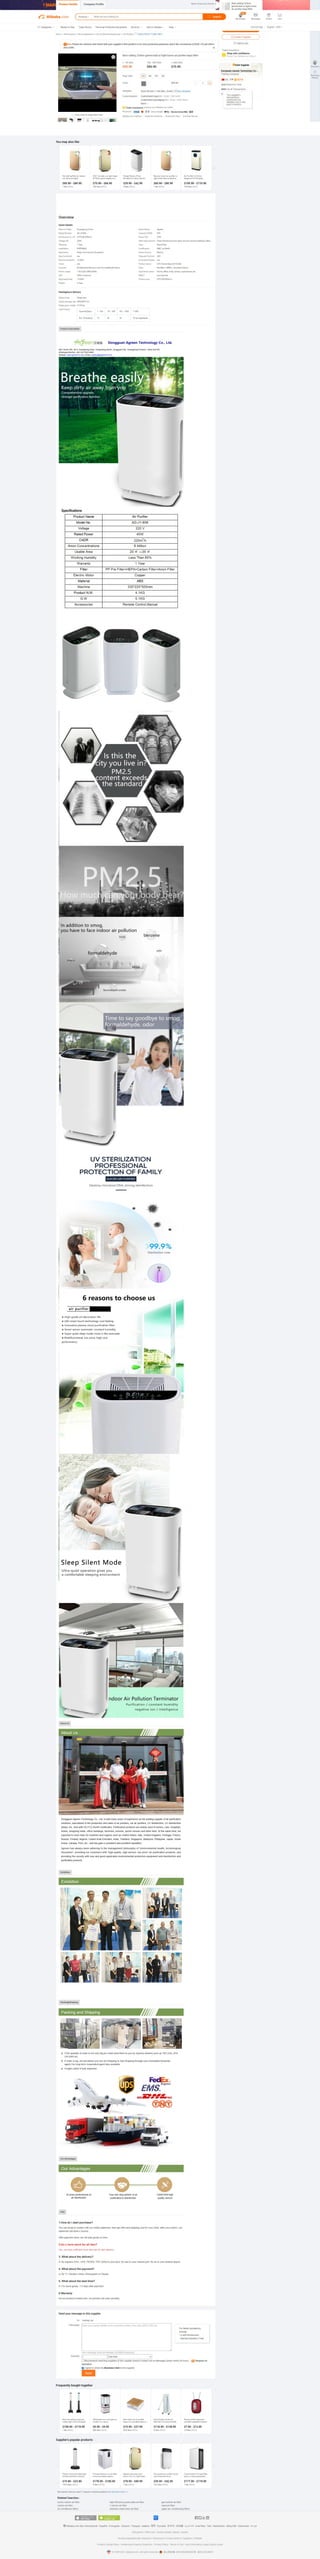 Best selling 254nm germicidal uv light home air purifier hepa filter